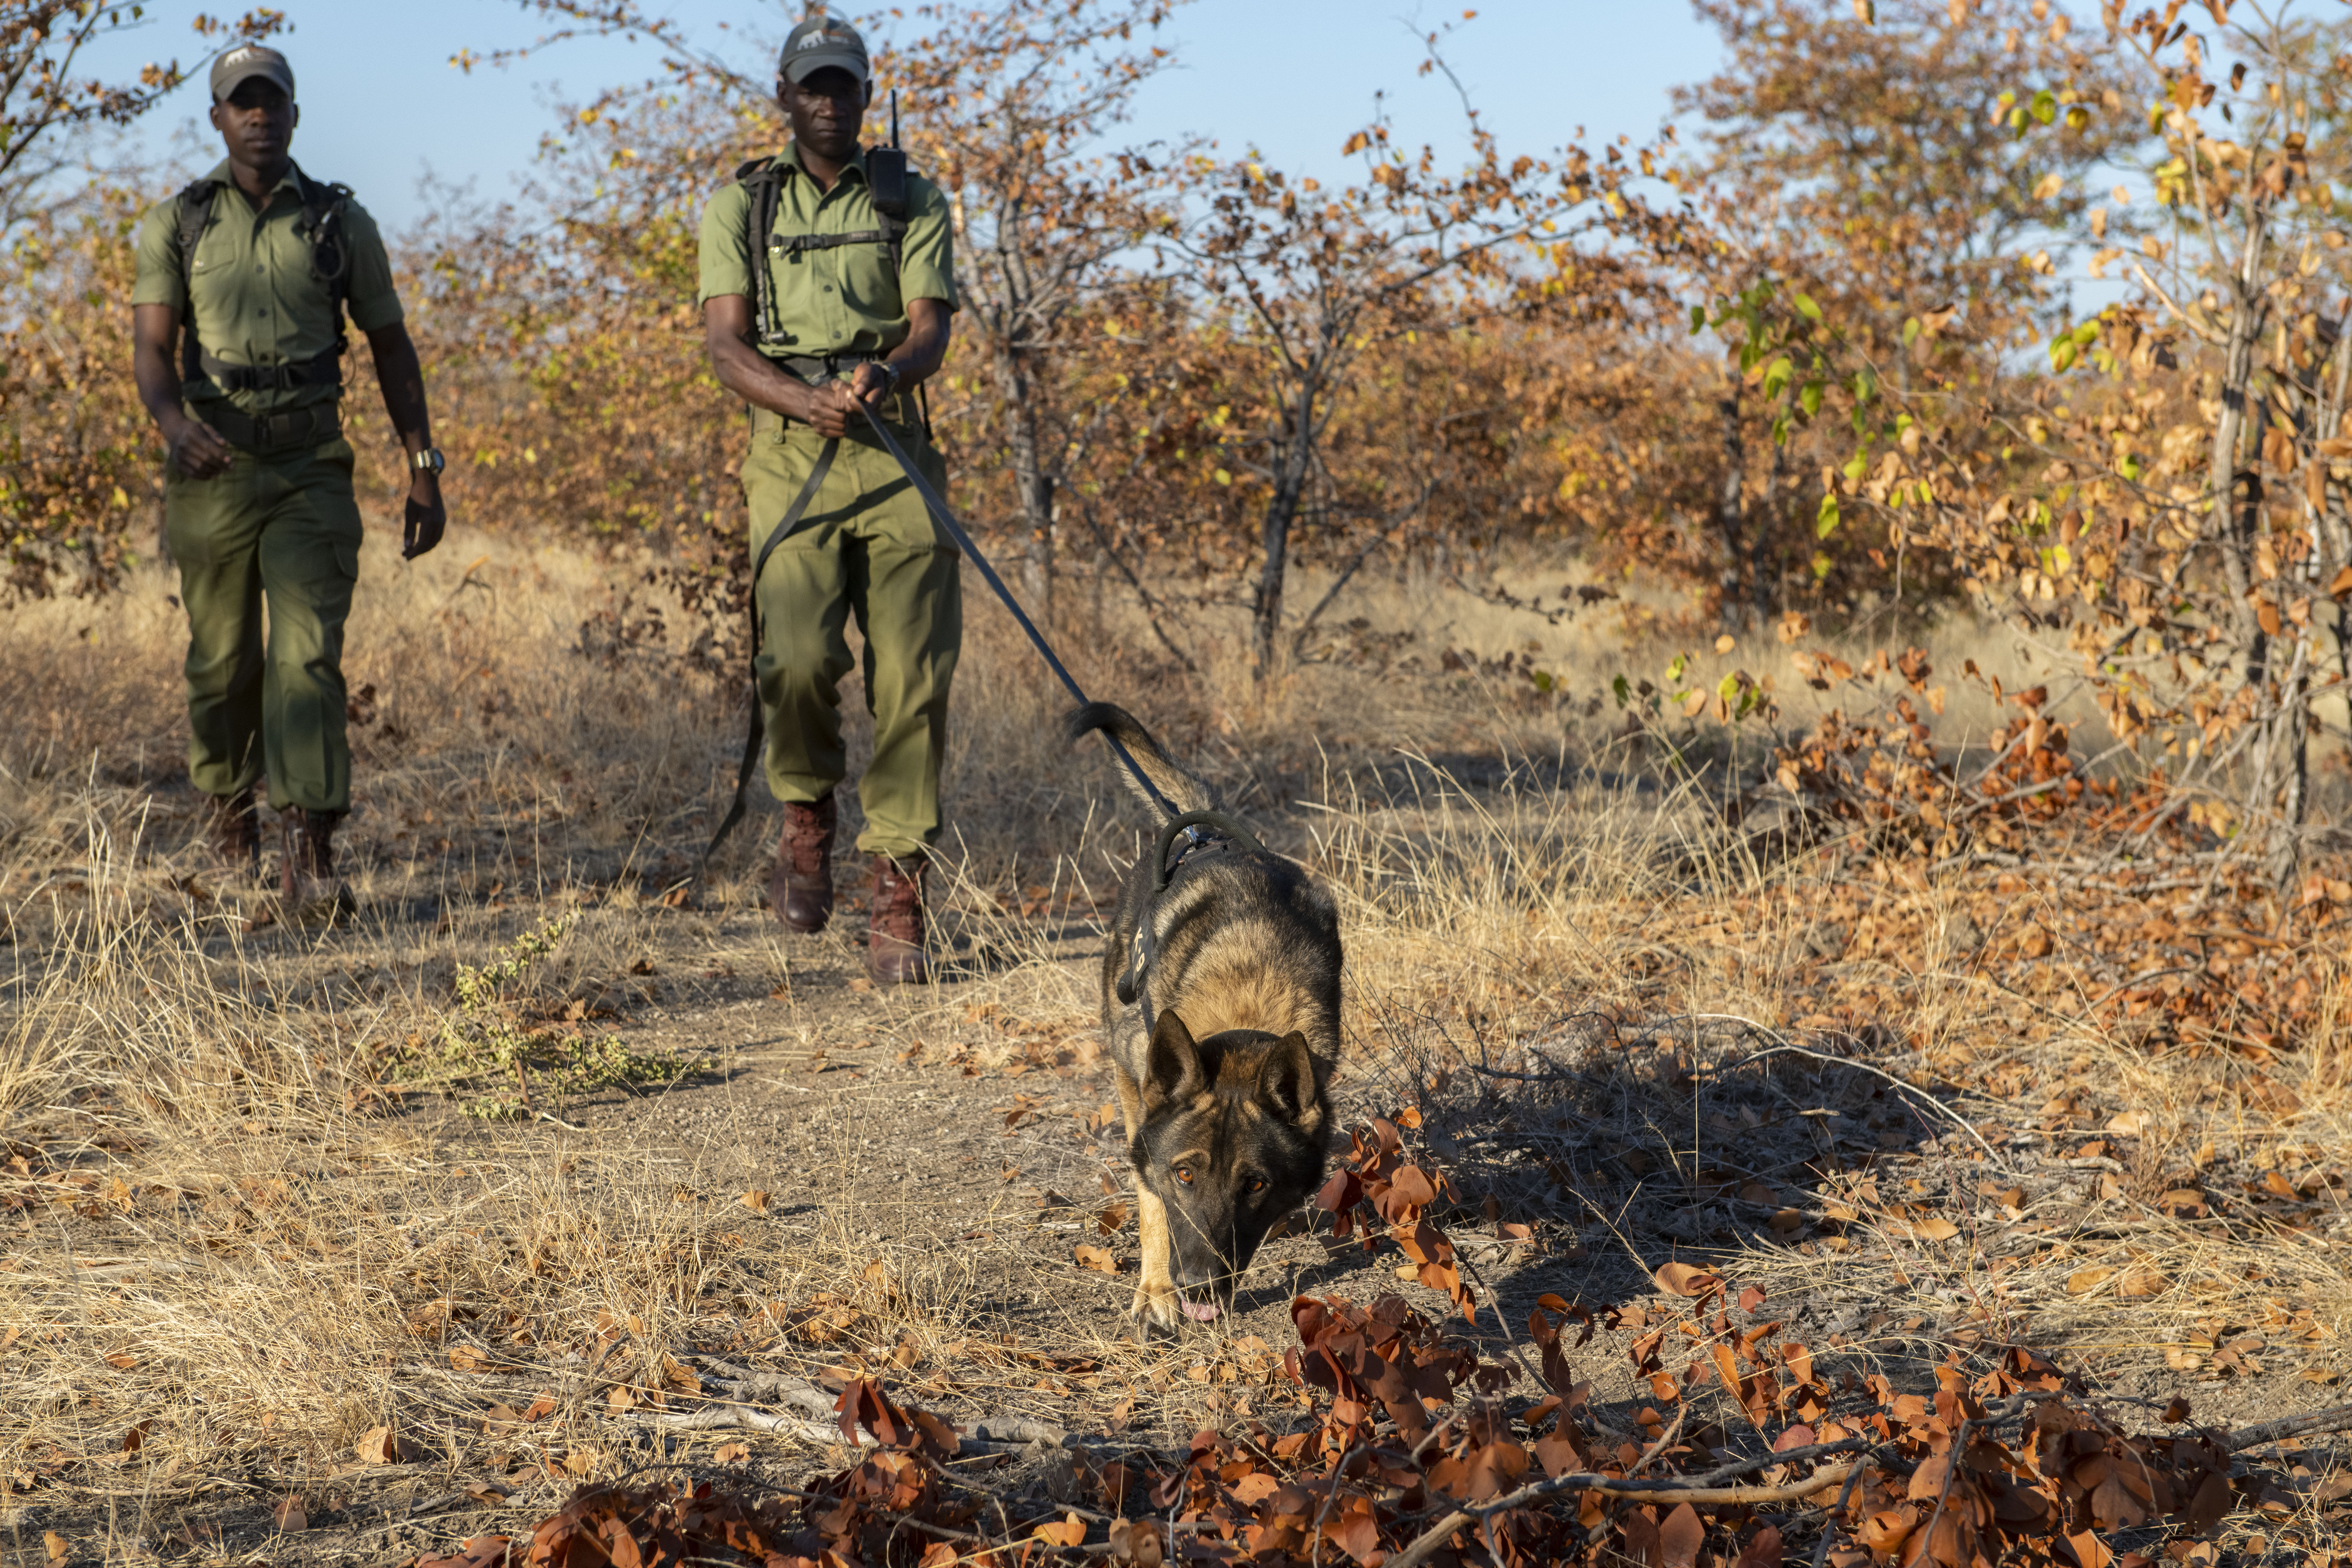 The dog Samy in the canine unit being trained training to find poachers in the bush by Dyson Hlelelwa. Gonarezhou NP, Zimbabwe. © Daniel Rosengren